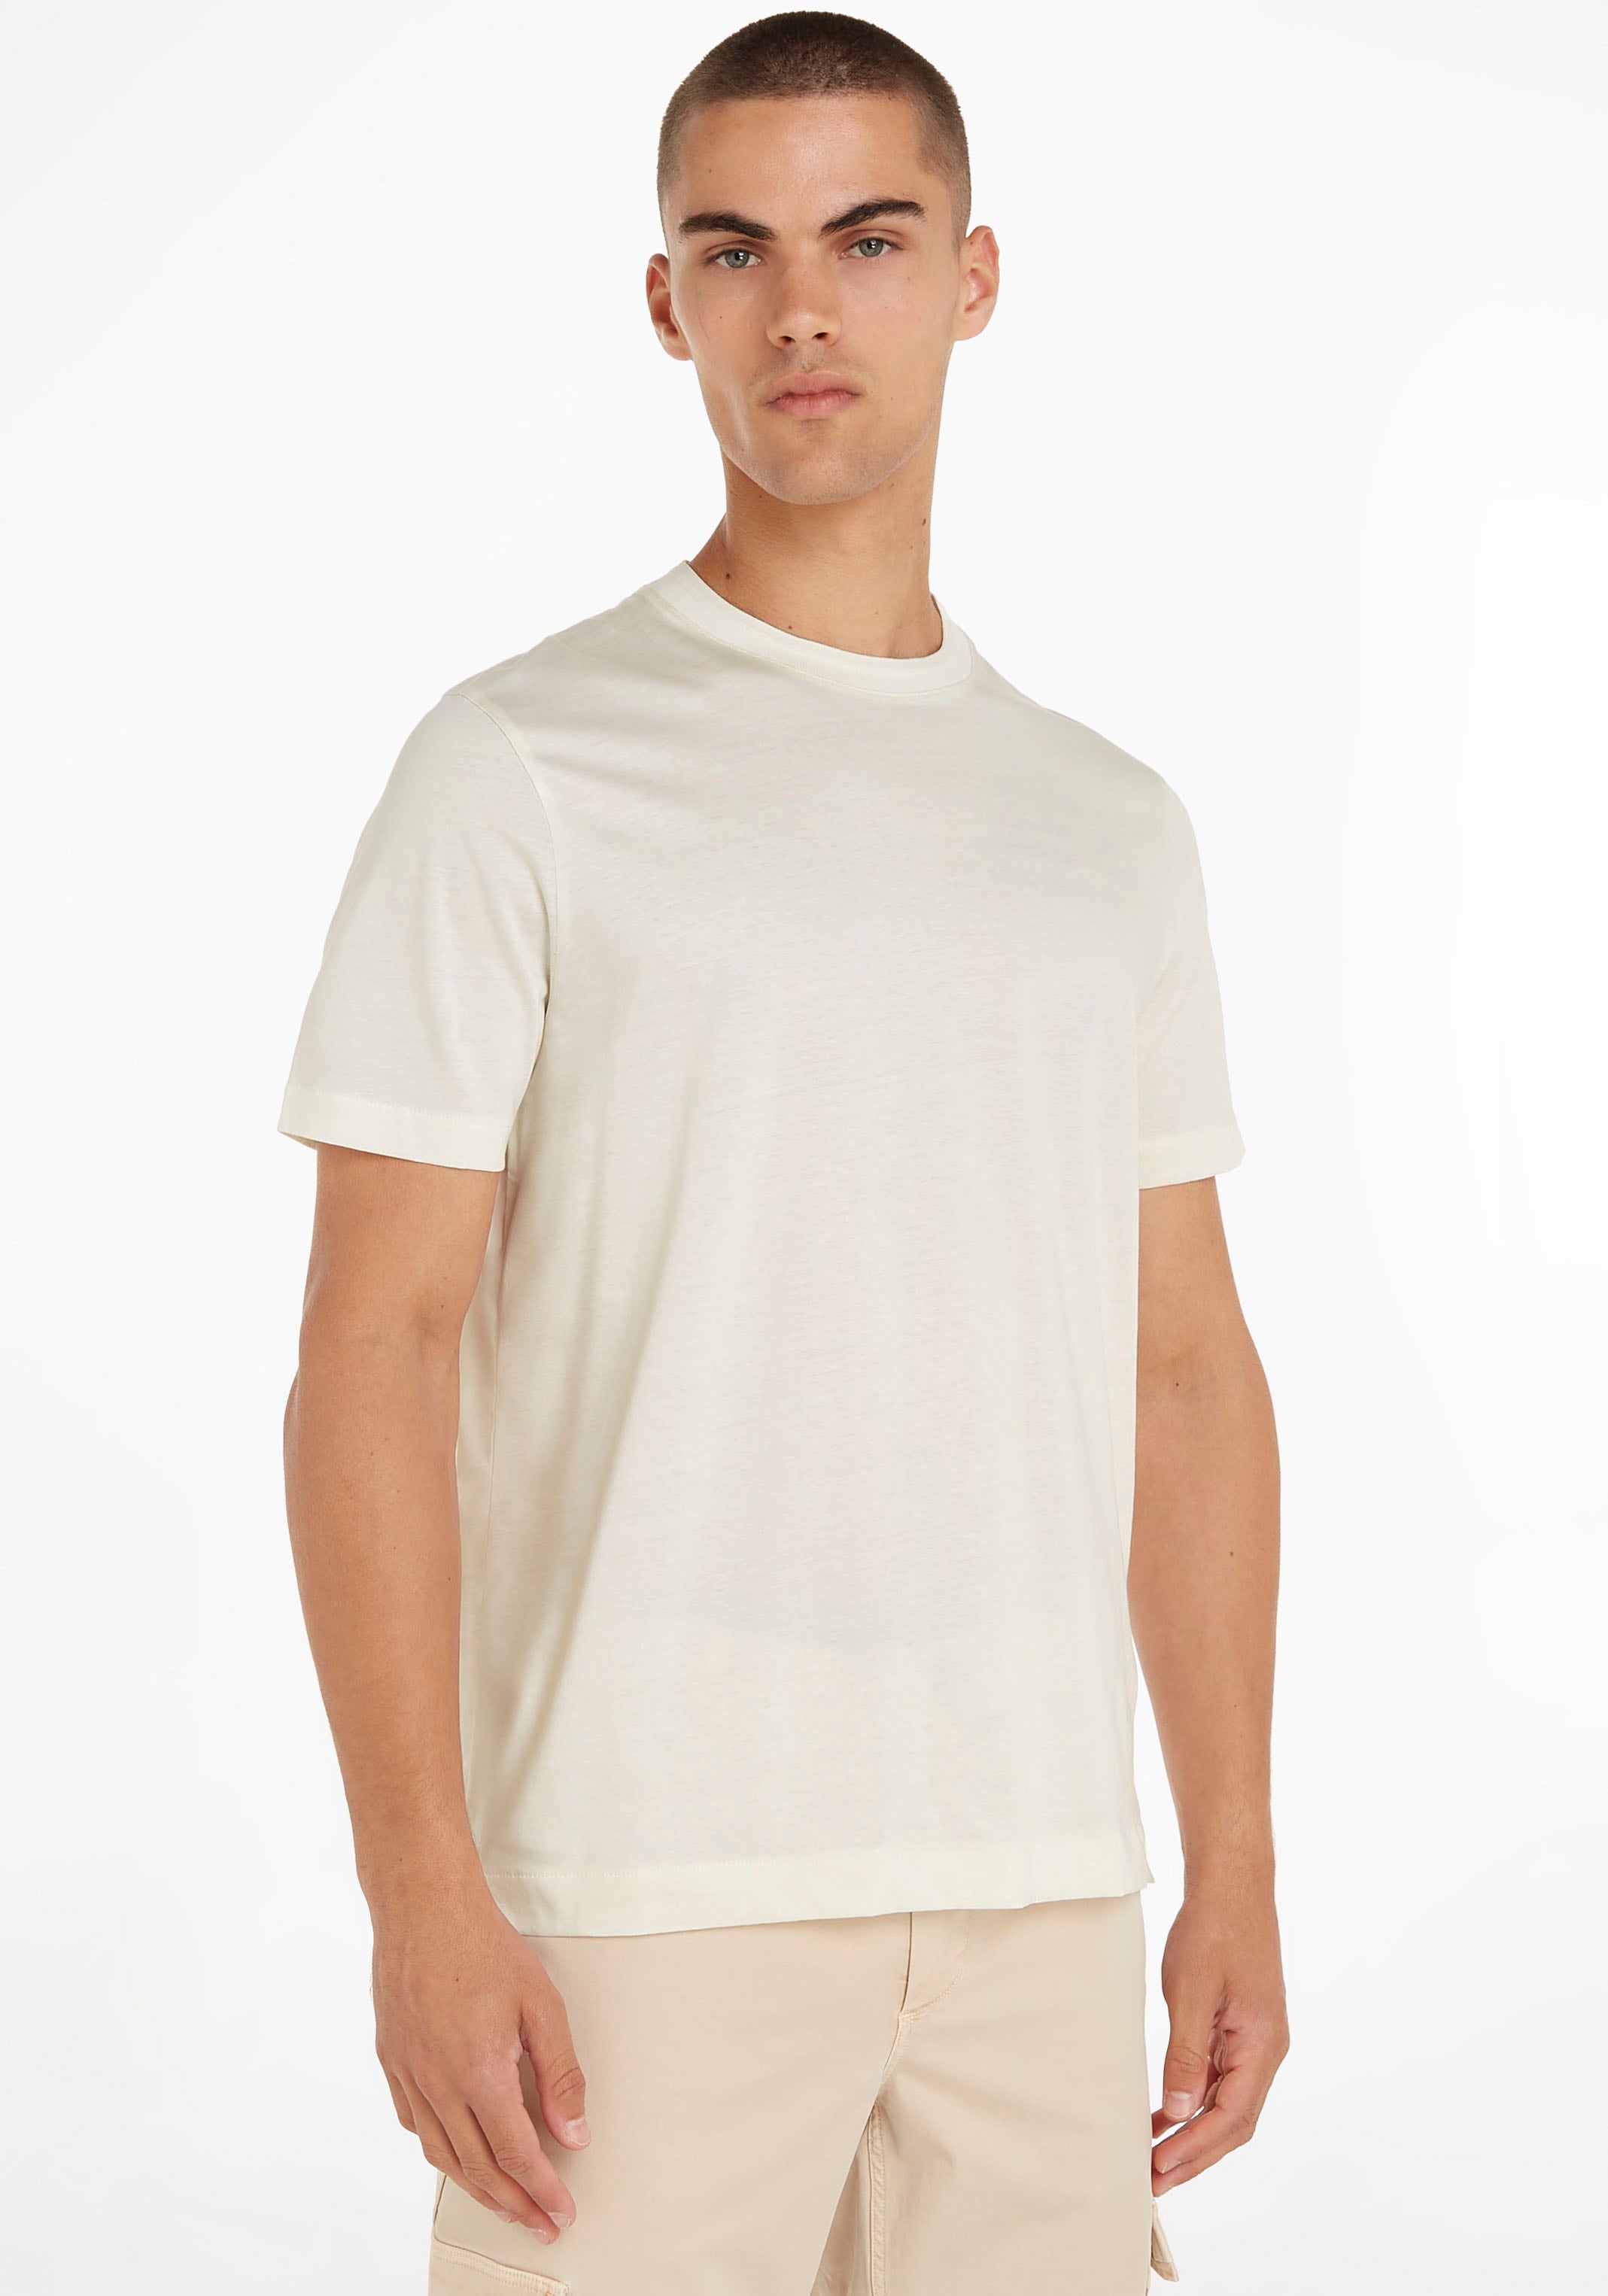 Tommy Hilfiger TAILORED T-Shirt »DC ESSENTIAL MERCERIZED TEE«, im klassischen Basic-Look